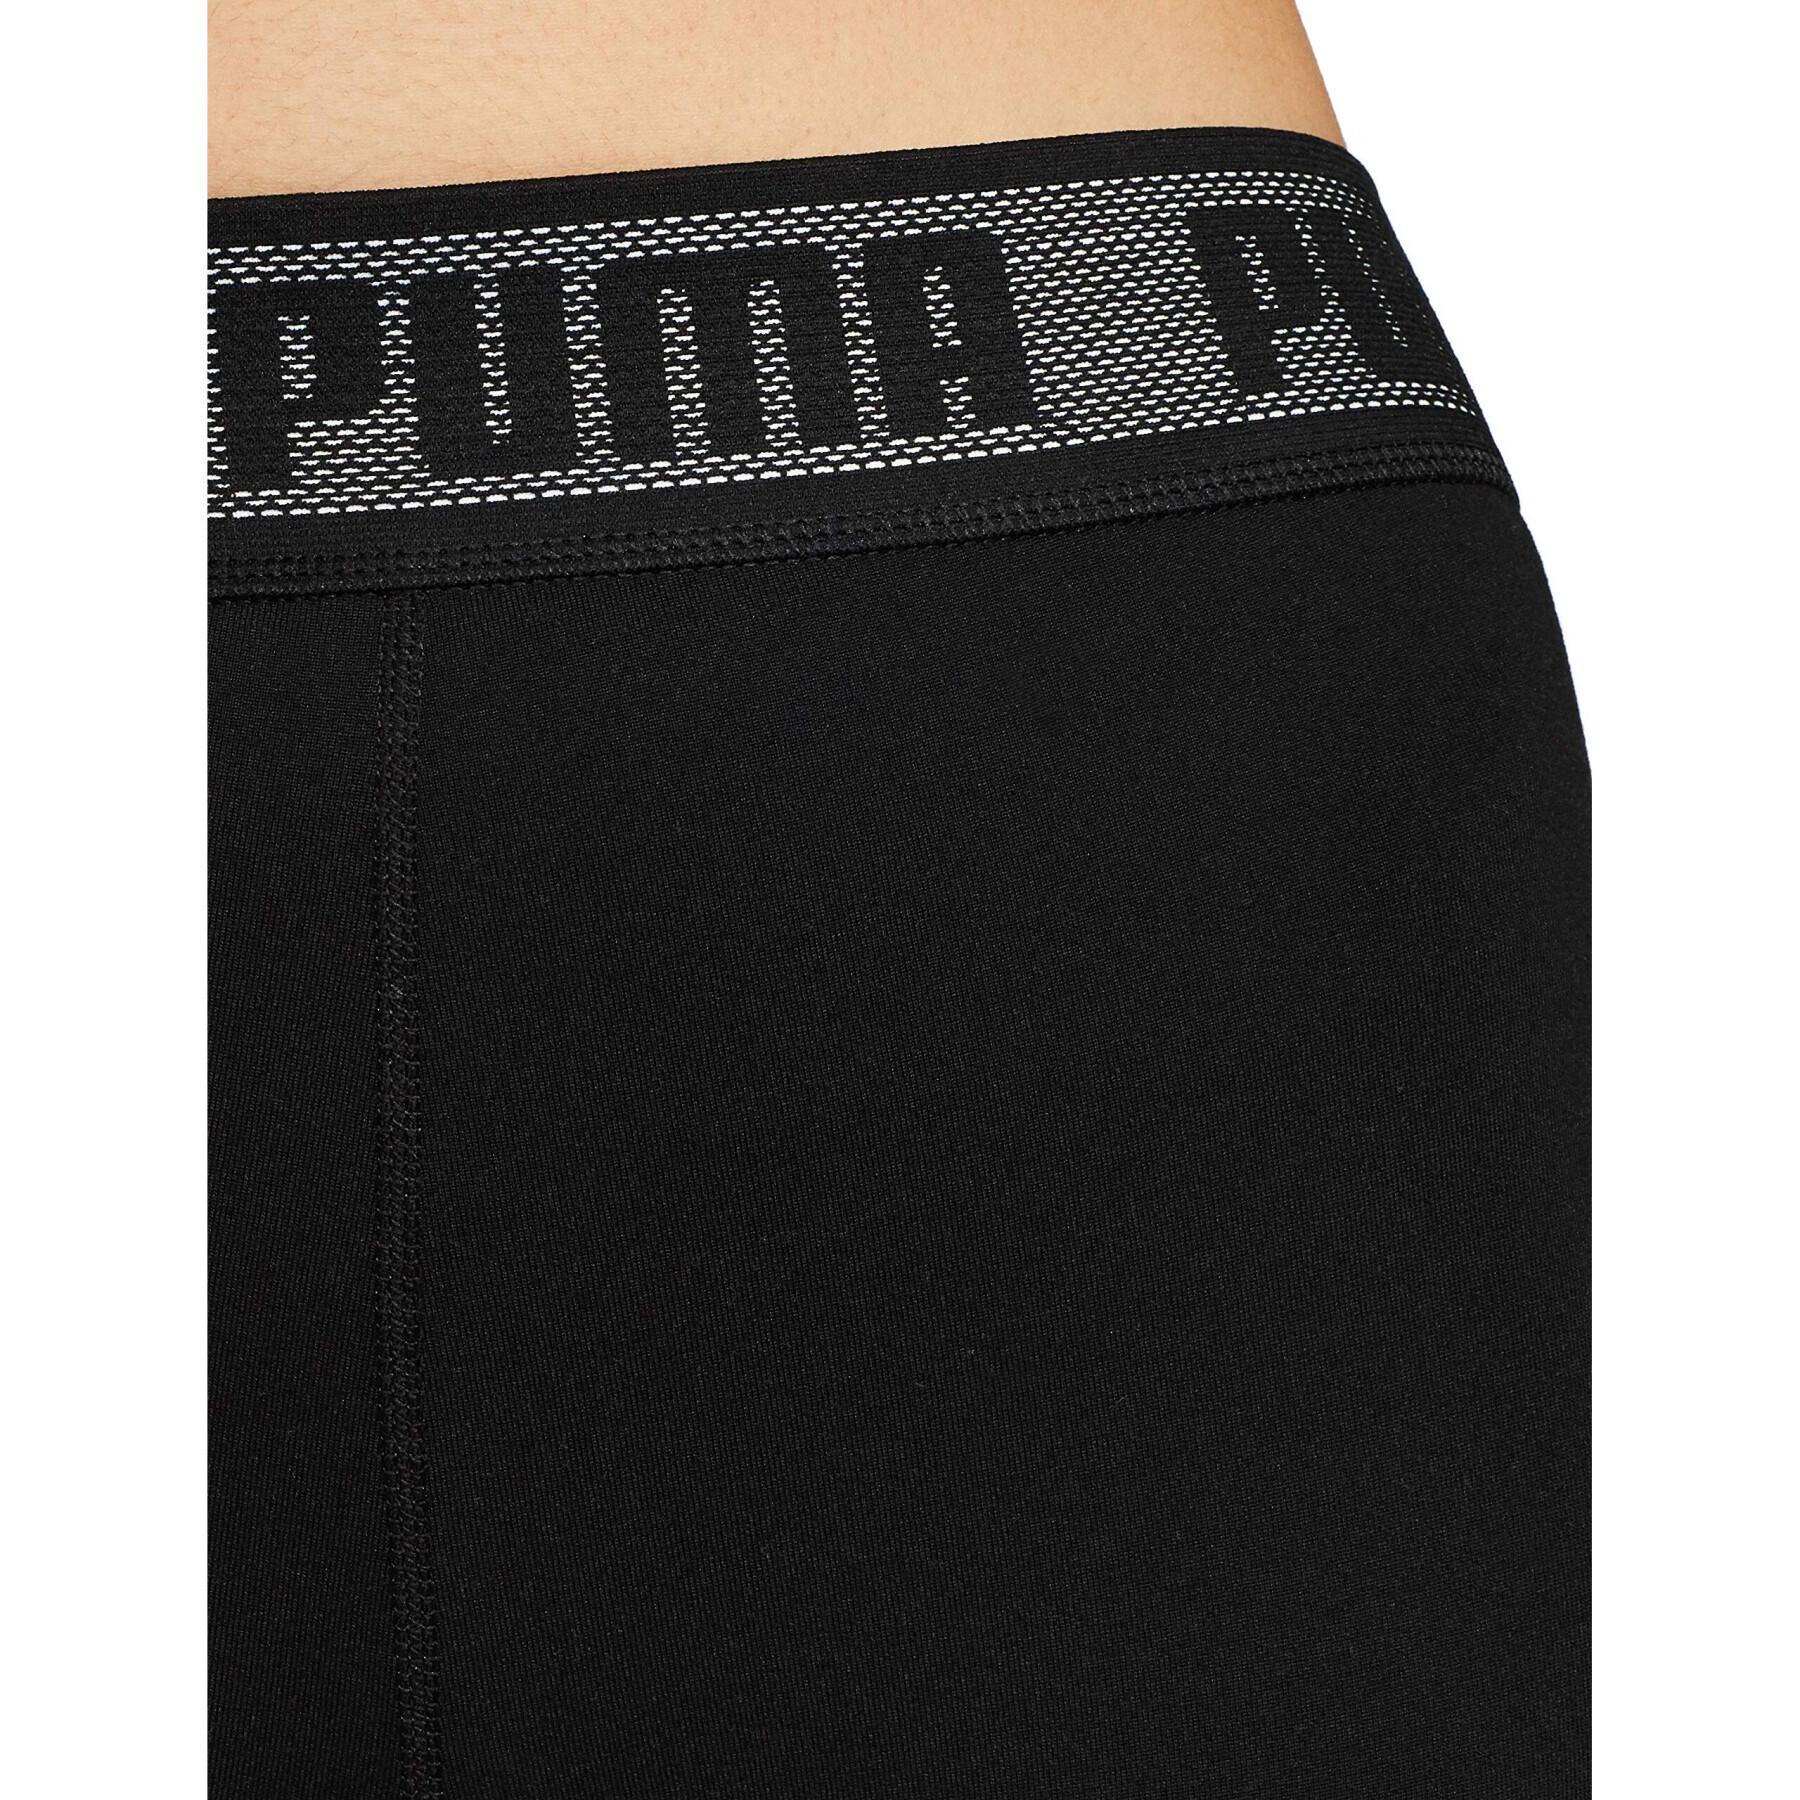 Women's trousers Puma 3/4 tight